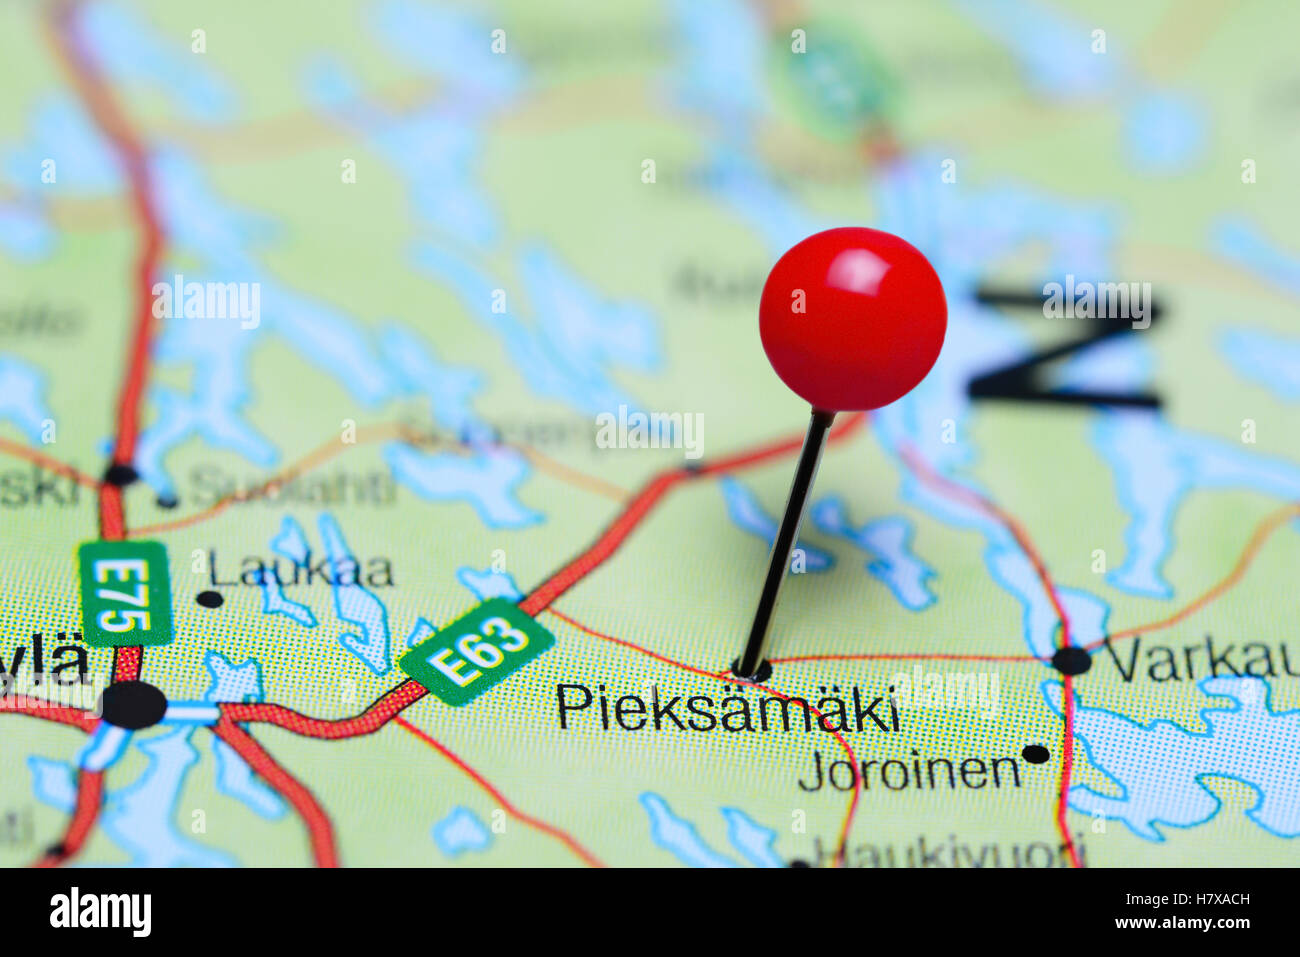 Pieksamaki pinned on a map of Finland Stock Photo